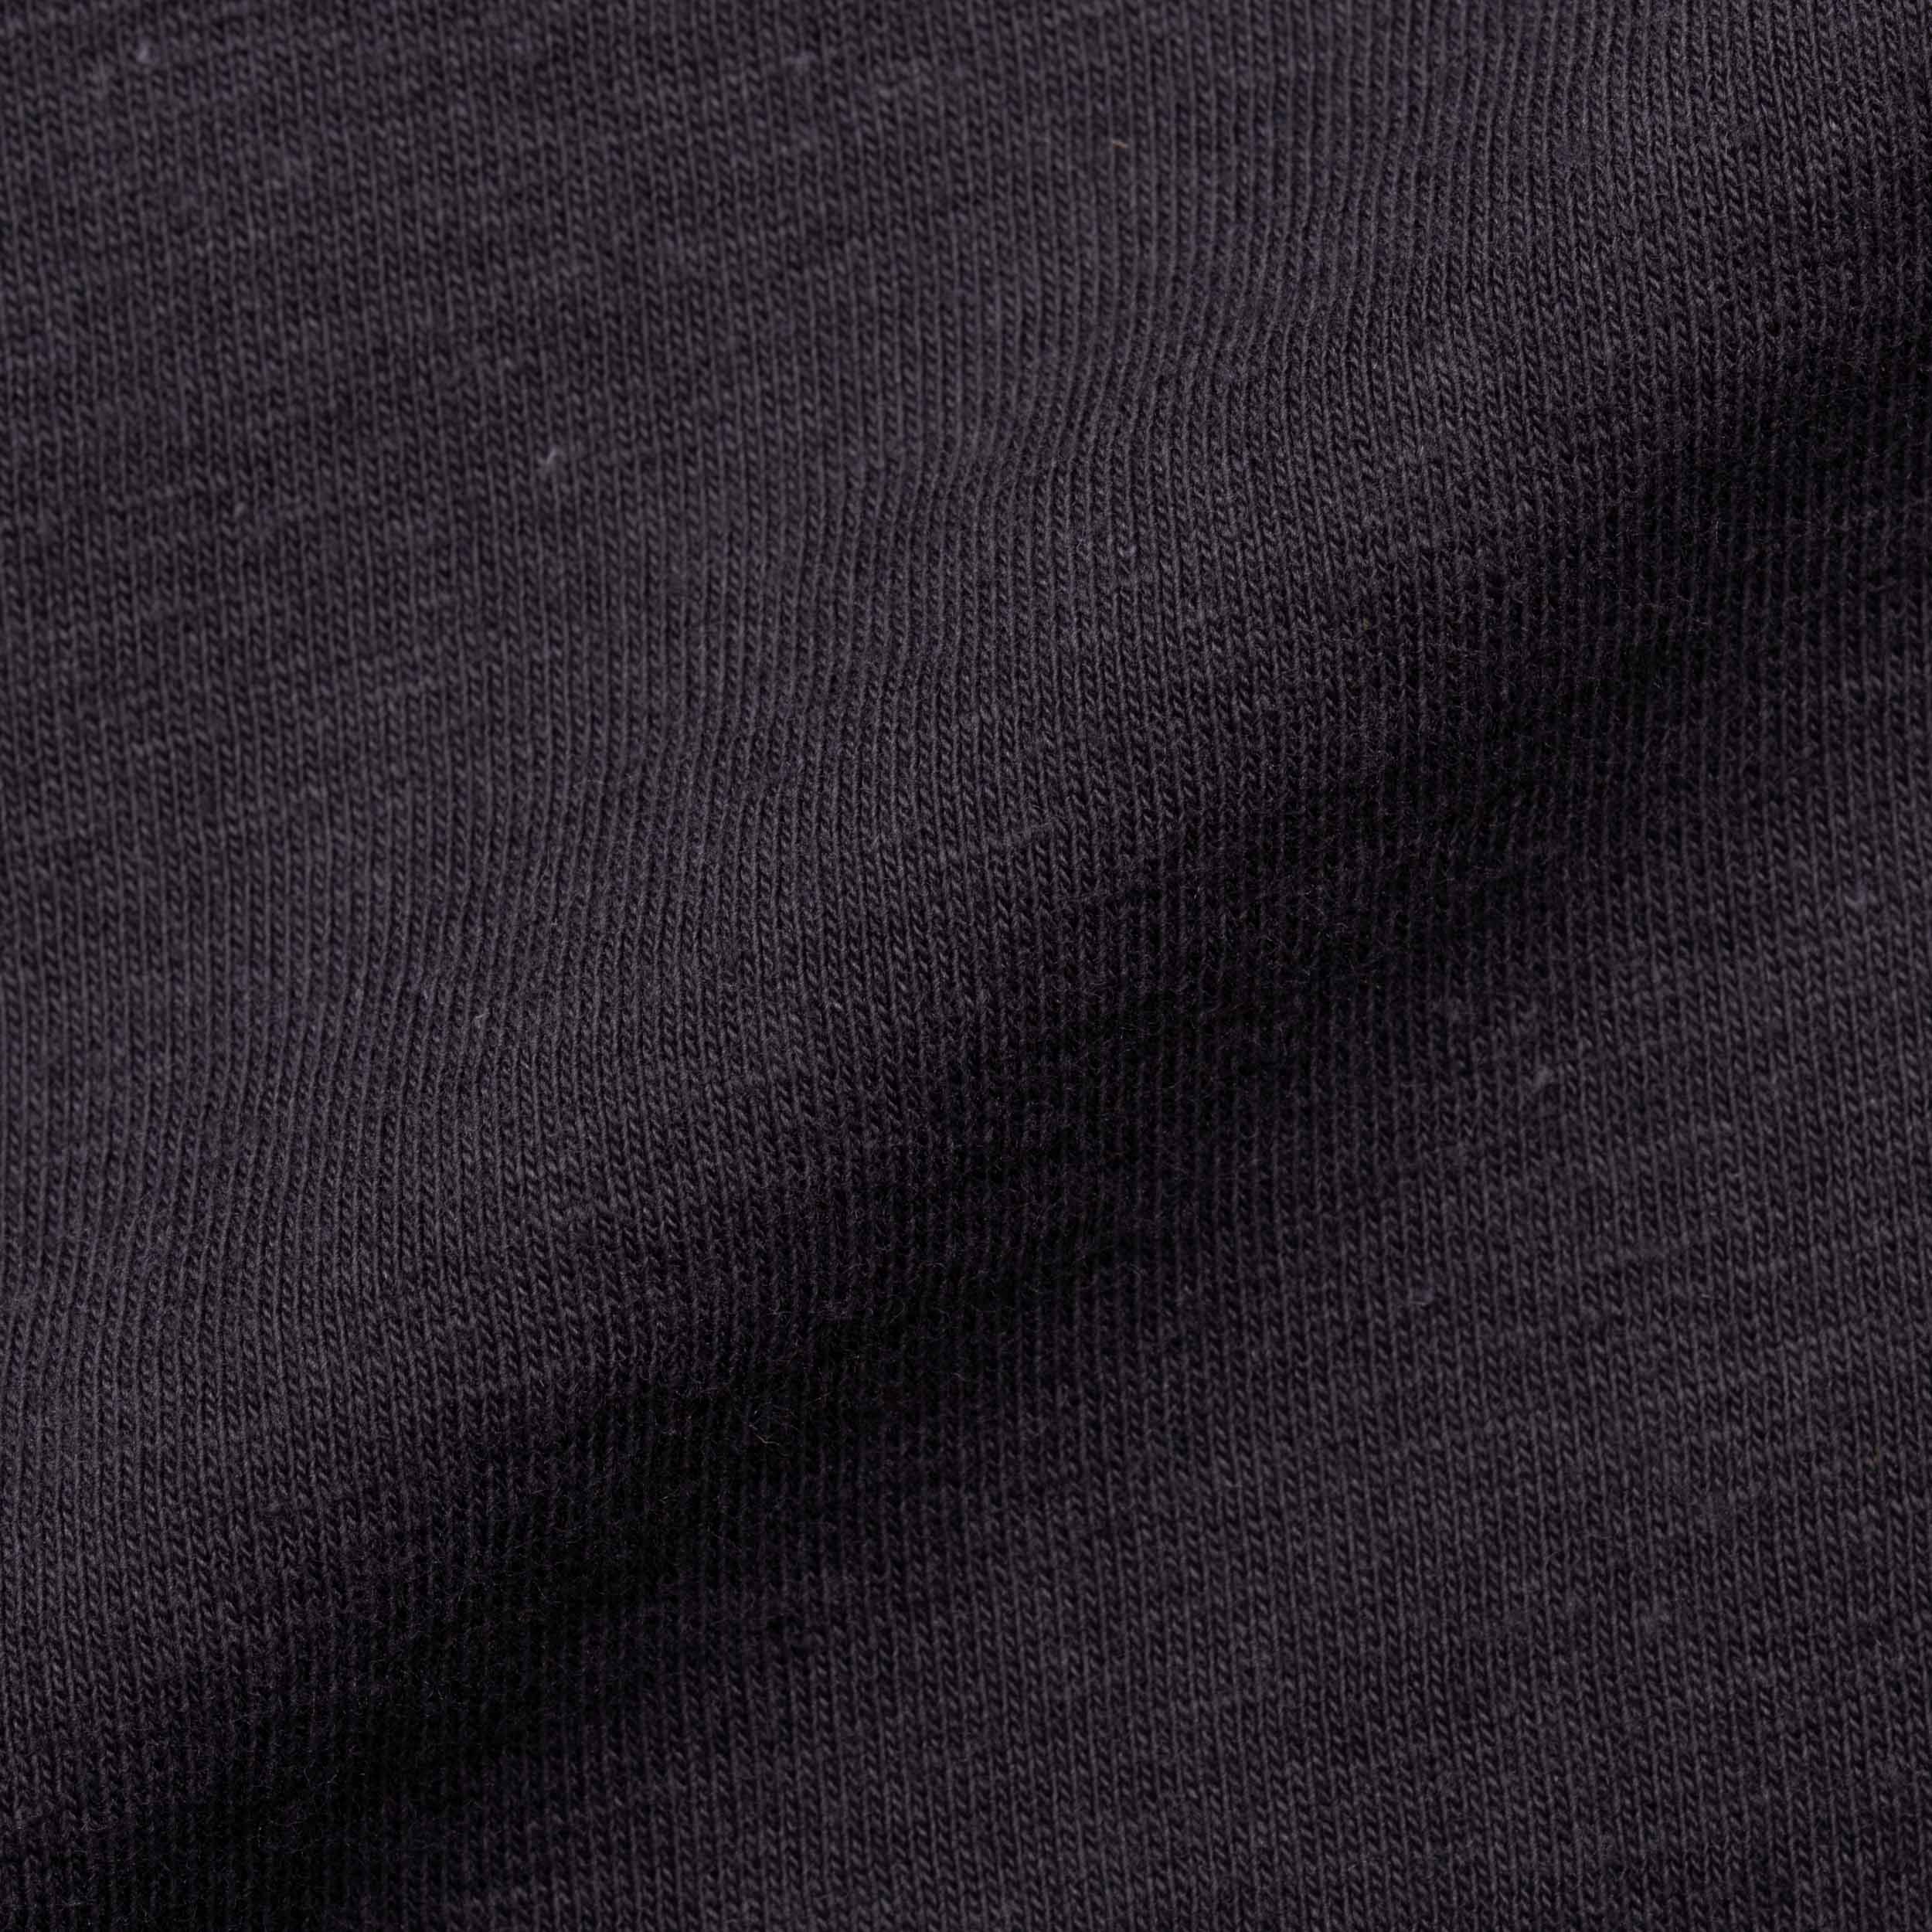 LEVI'S Vintage Clothing "Bound For Glory" Gray LVC T-Shirt LEVI'S